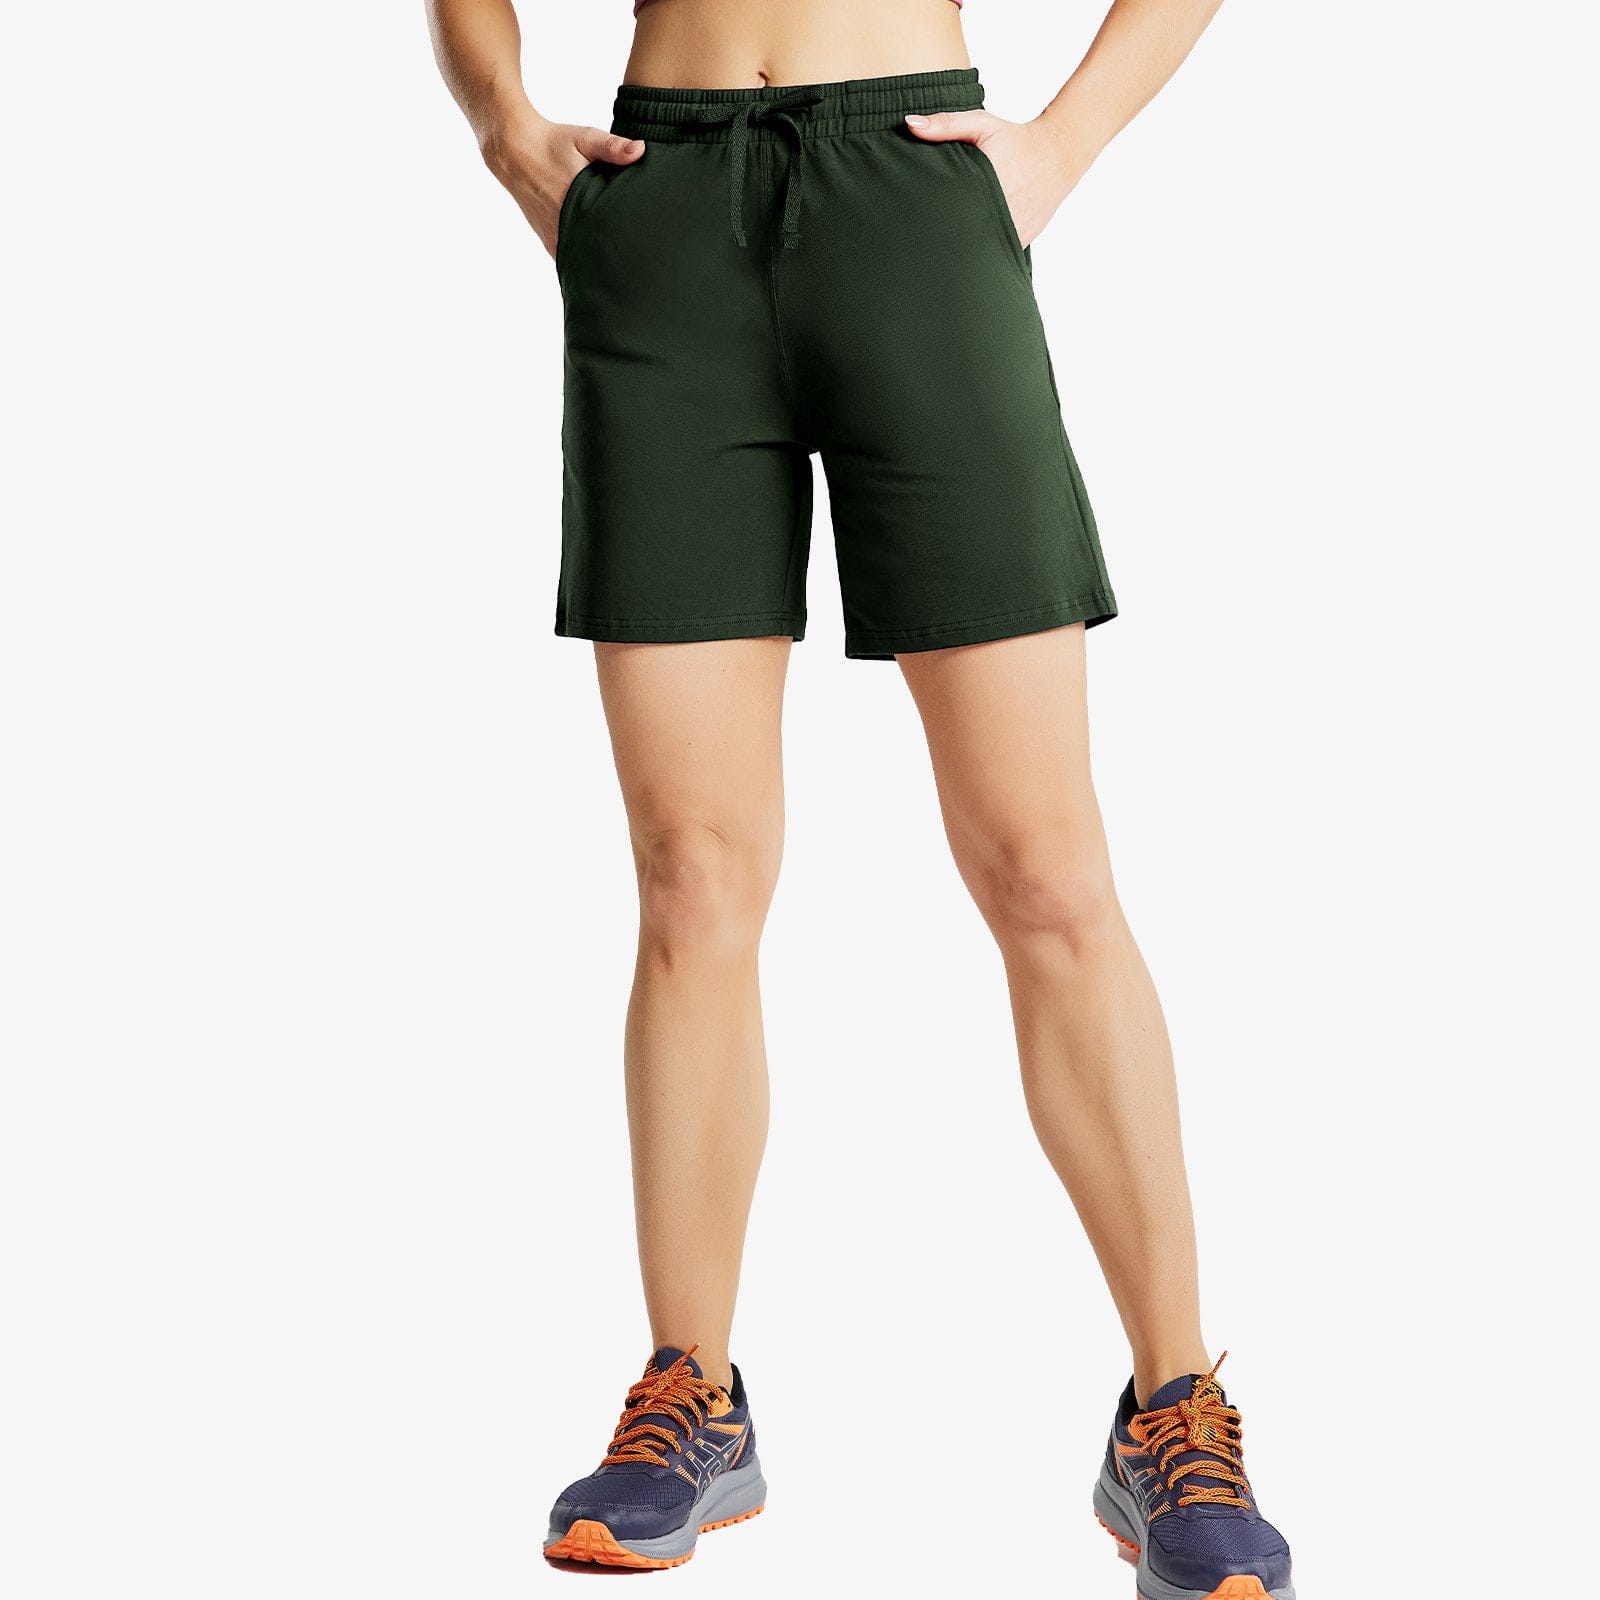 Women's Bermuda Cotton Shorts with Pockets Lightweight & Stretch Women Shorts Dark Green / S MIER